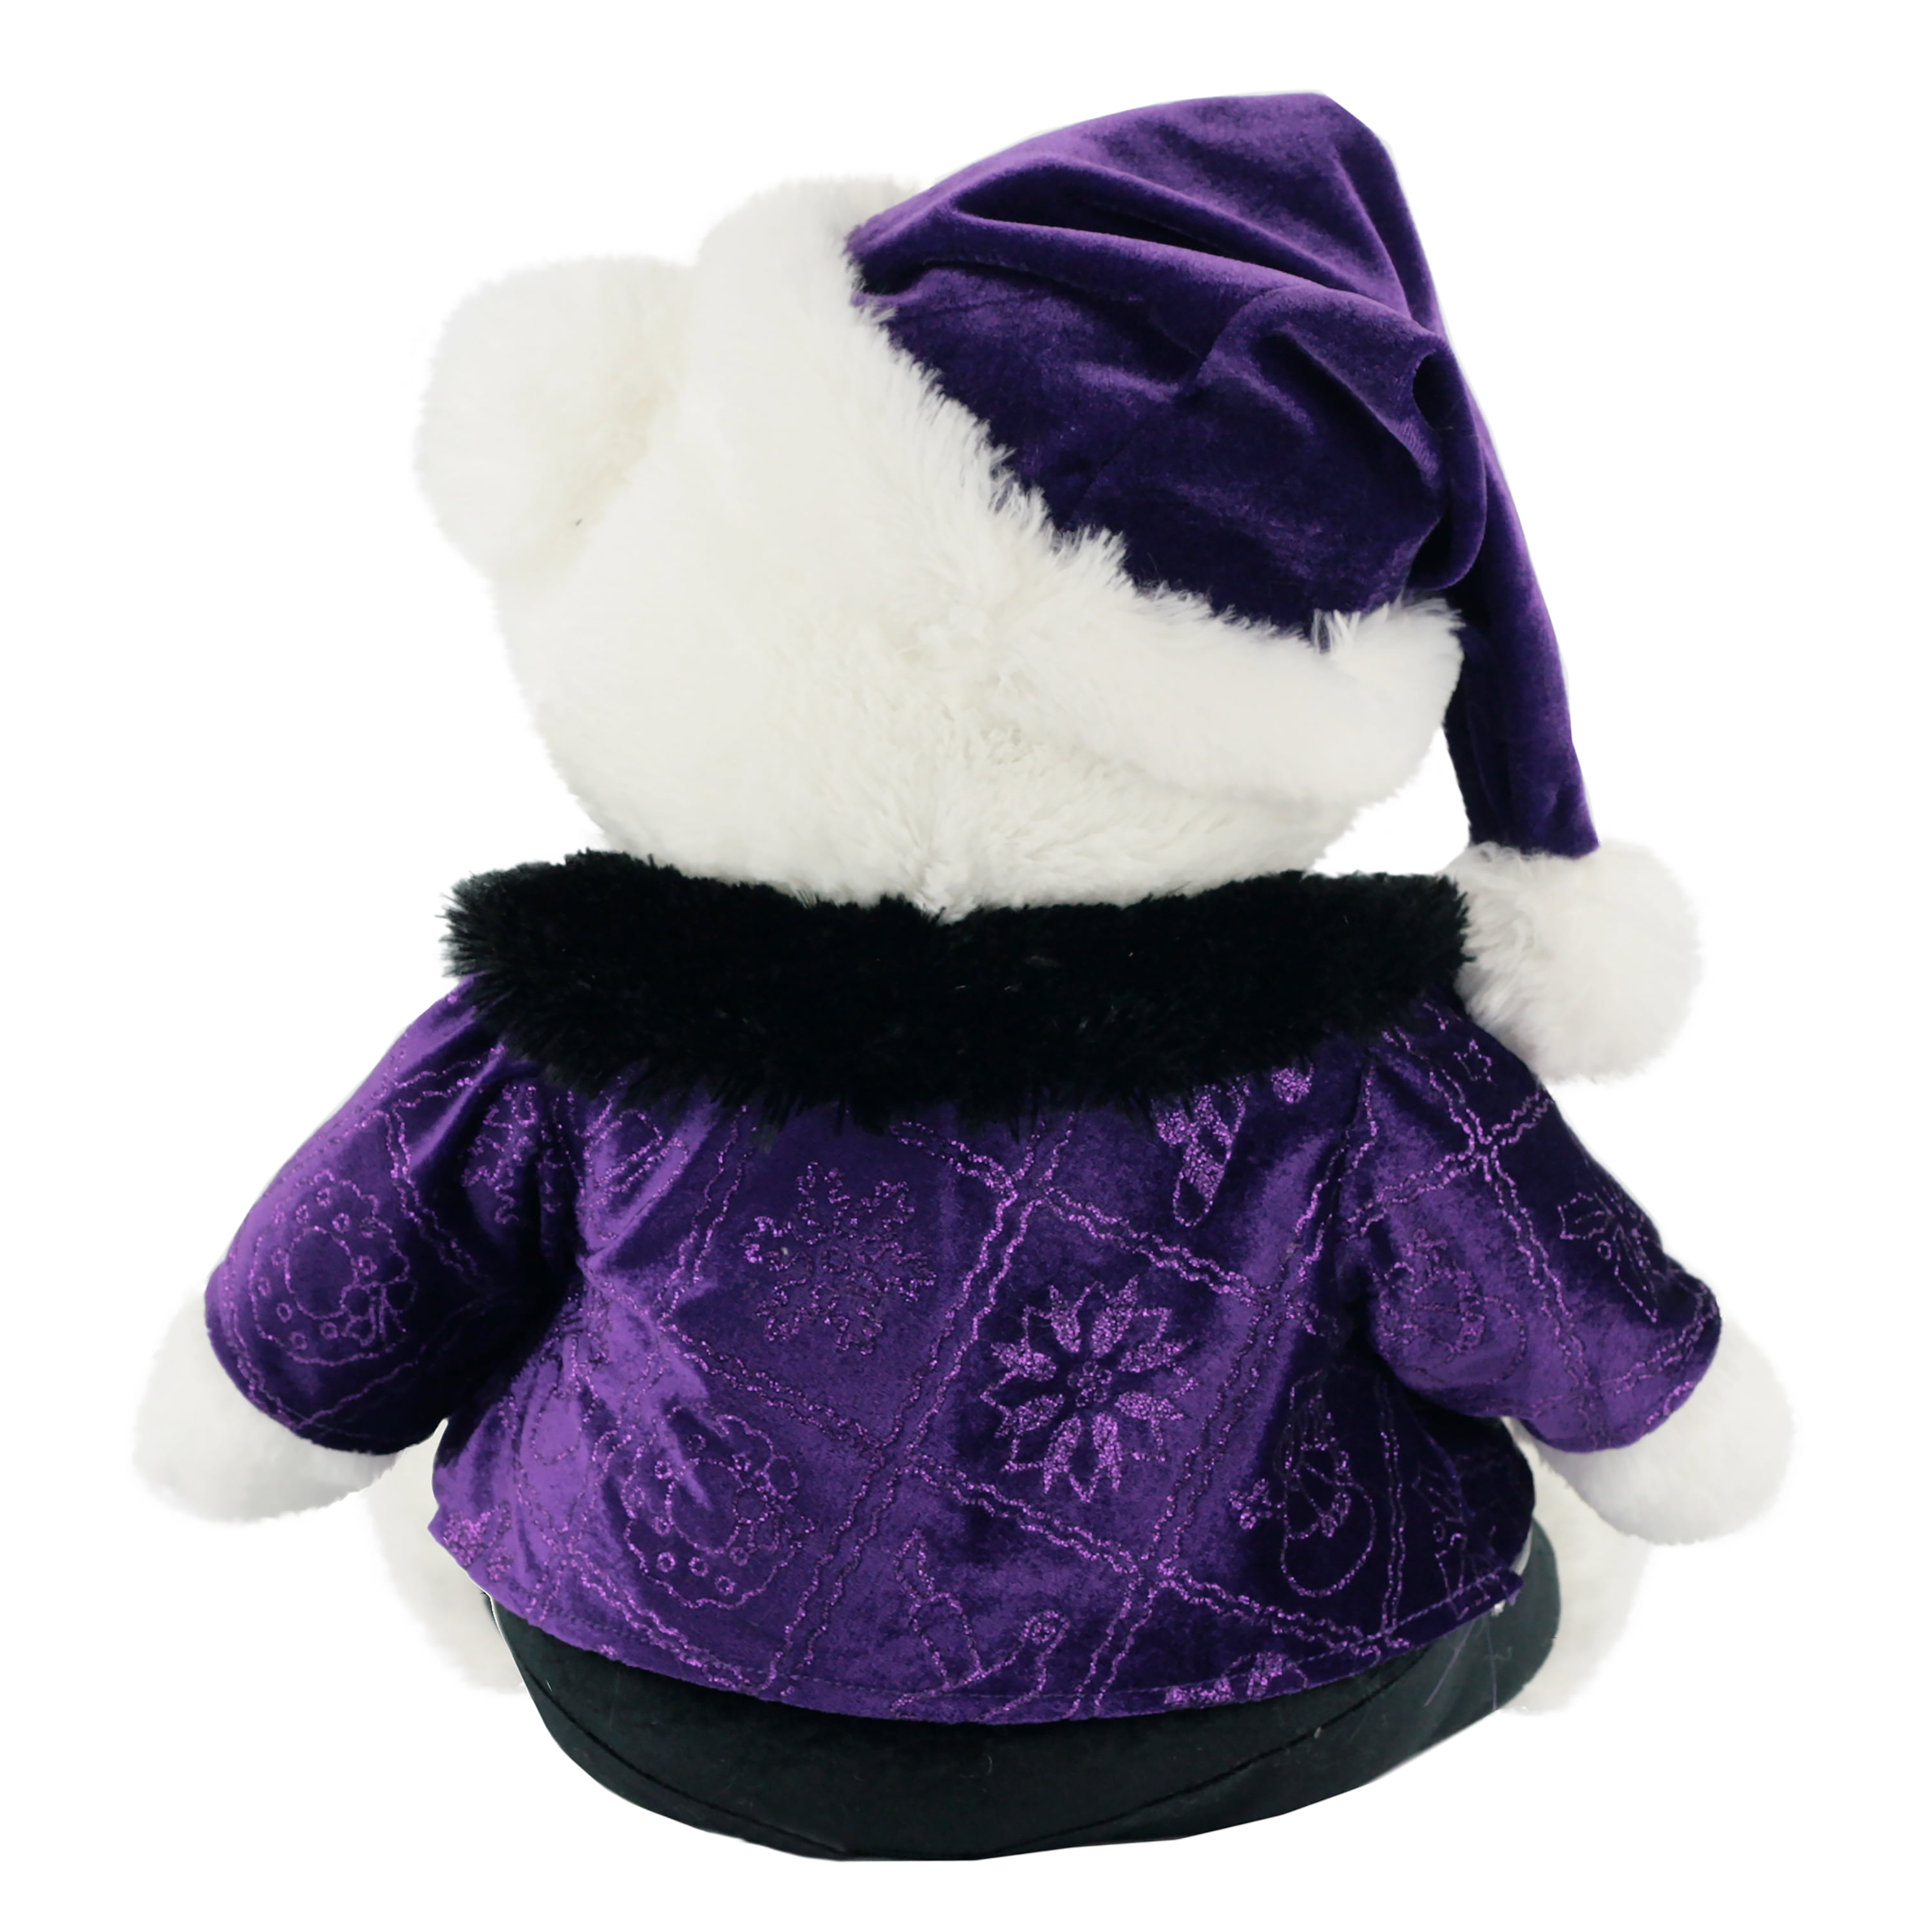 2 WalMART CHRISTMAS Snowflake TEDDY BEARs 2020 White Girl&Boy 20" Purple outfit